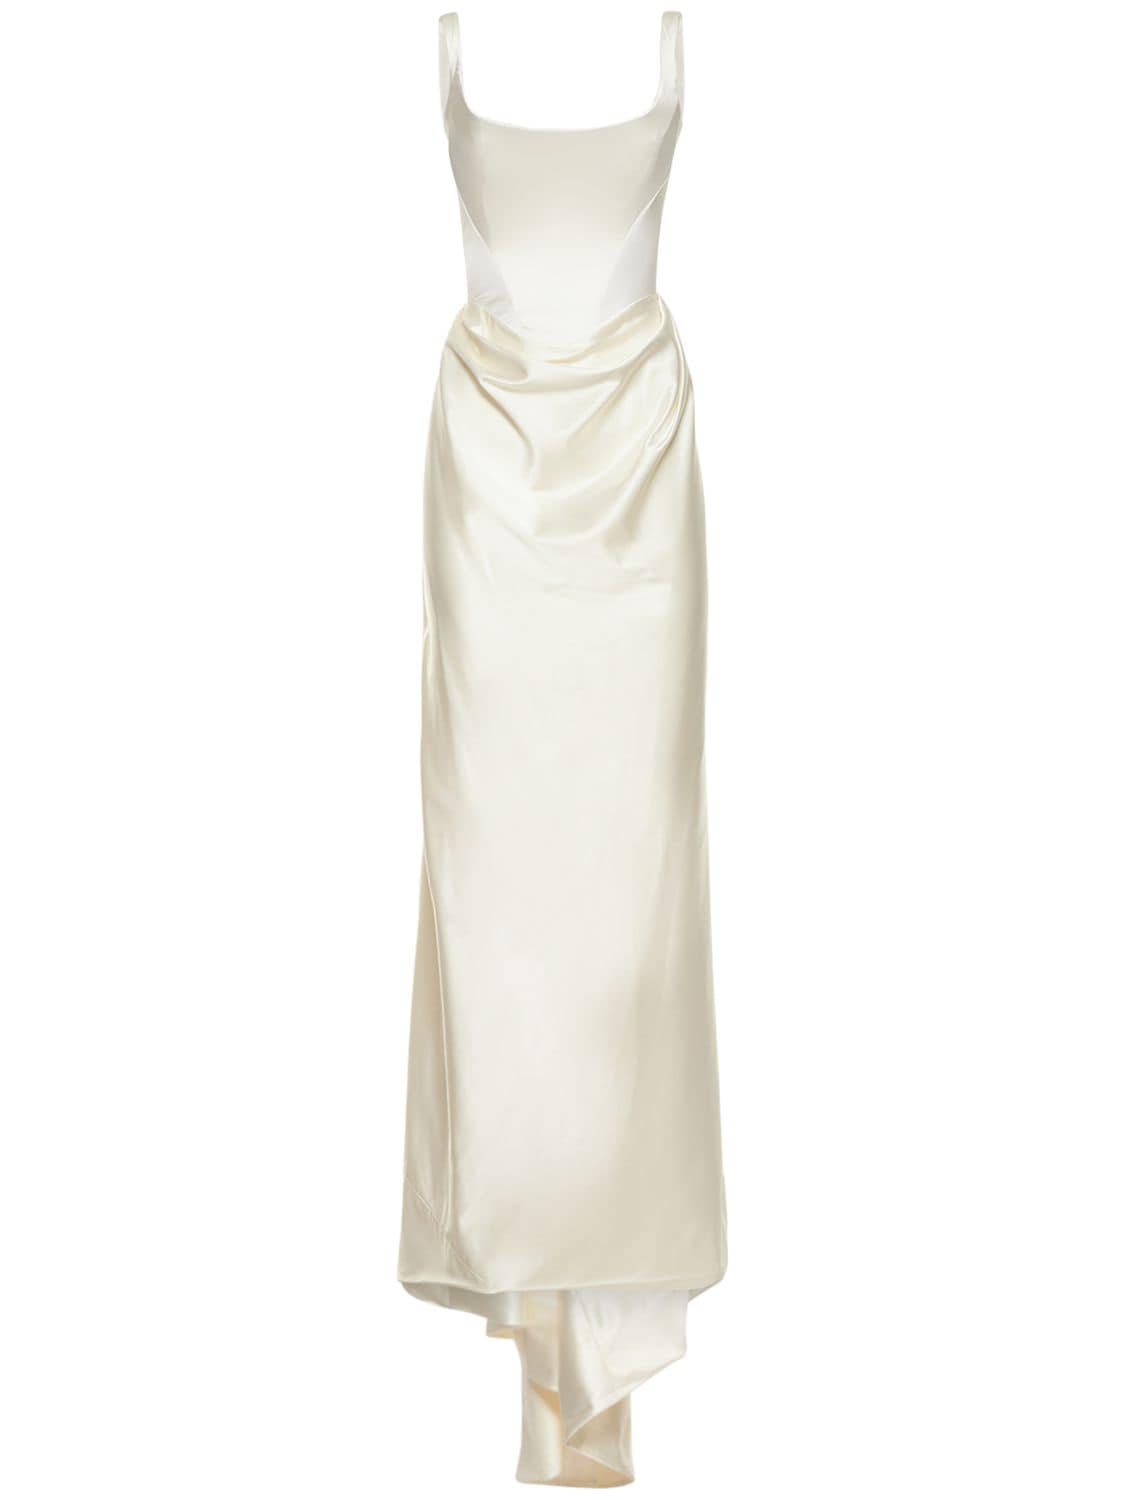 Vivienne Westwood - Camille stretch satin corset dress - Ivory ...